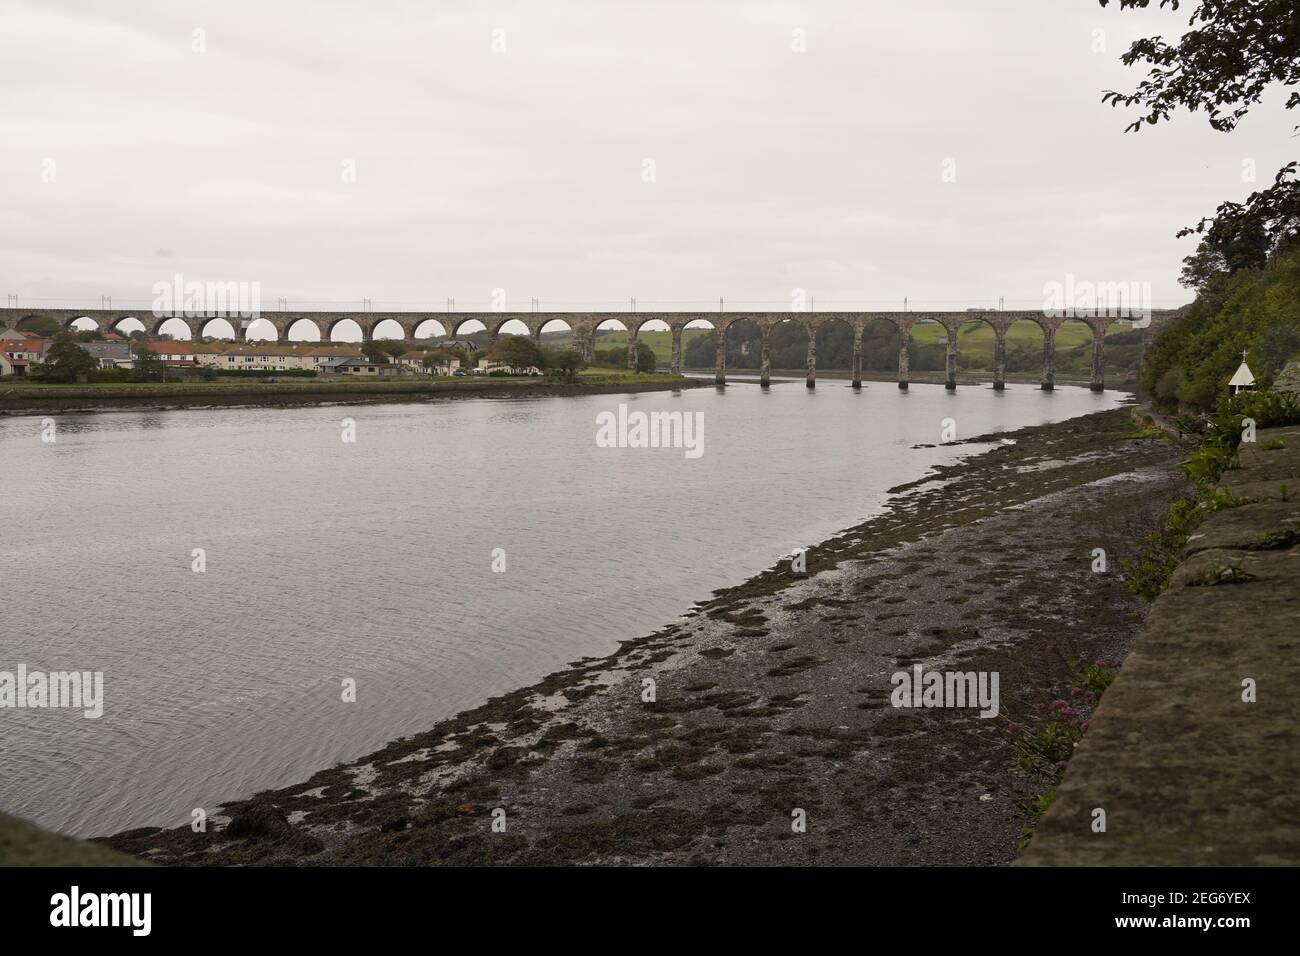 The Royal Border Bridge looping over the river Tweed Stock Photo